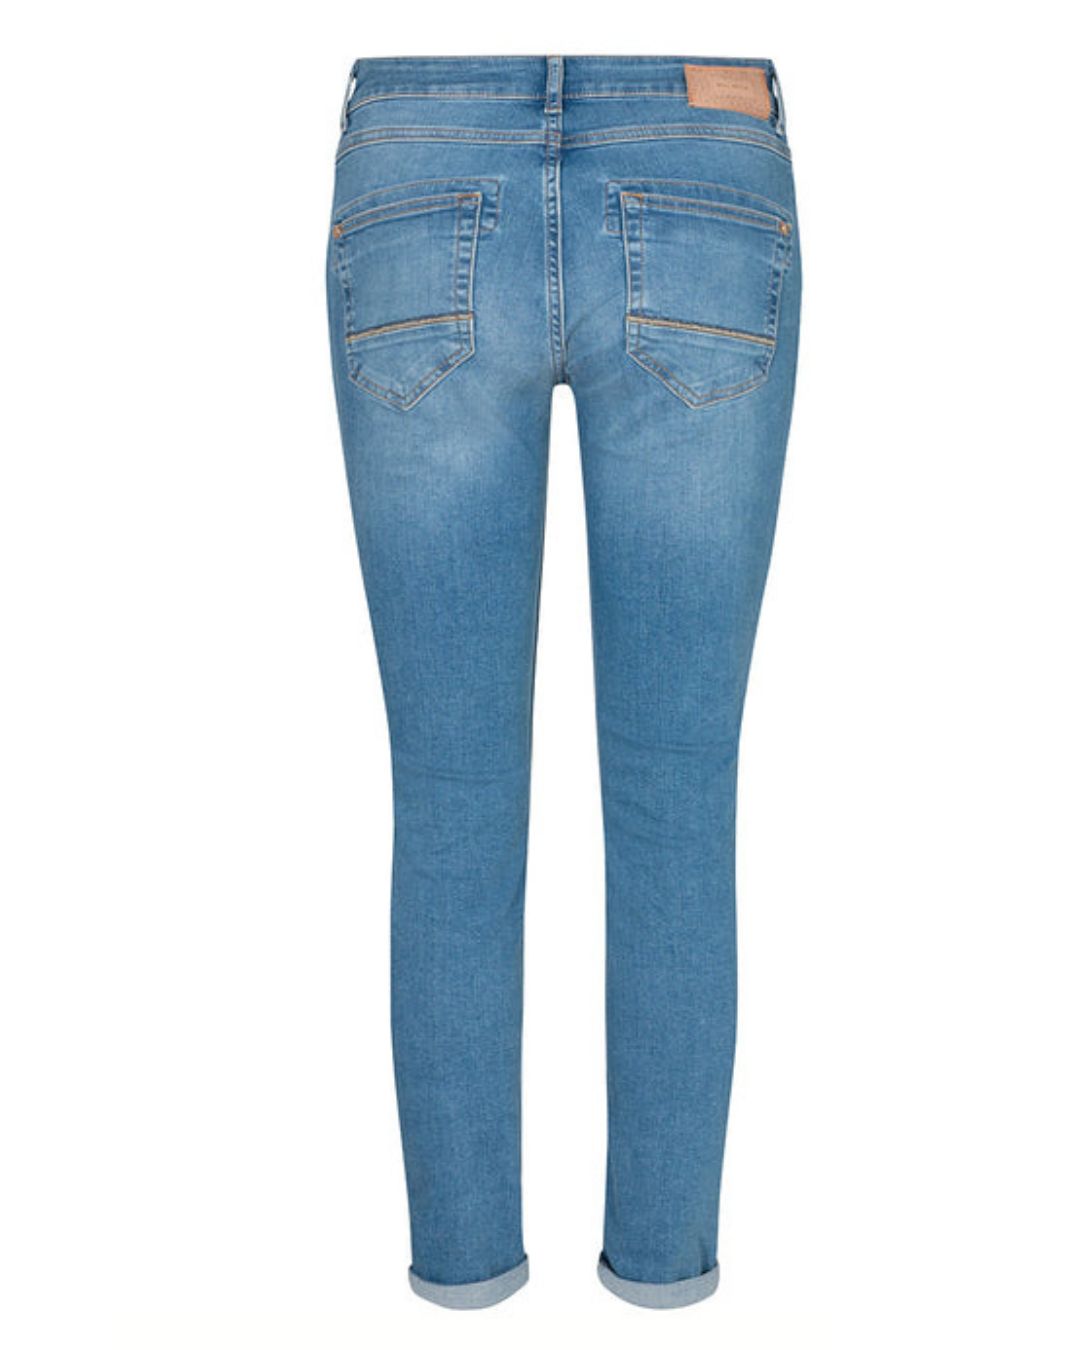 Naomi Luna LB Jeans - Blue